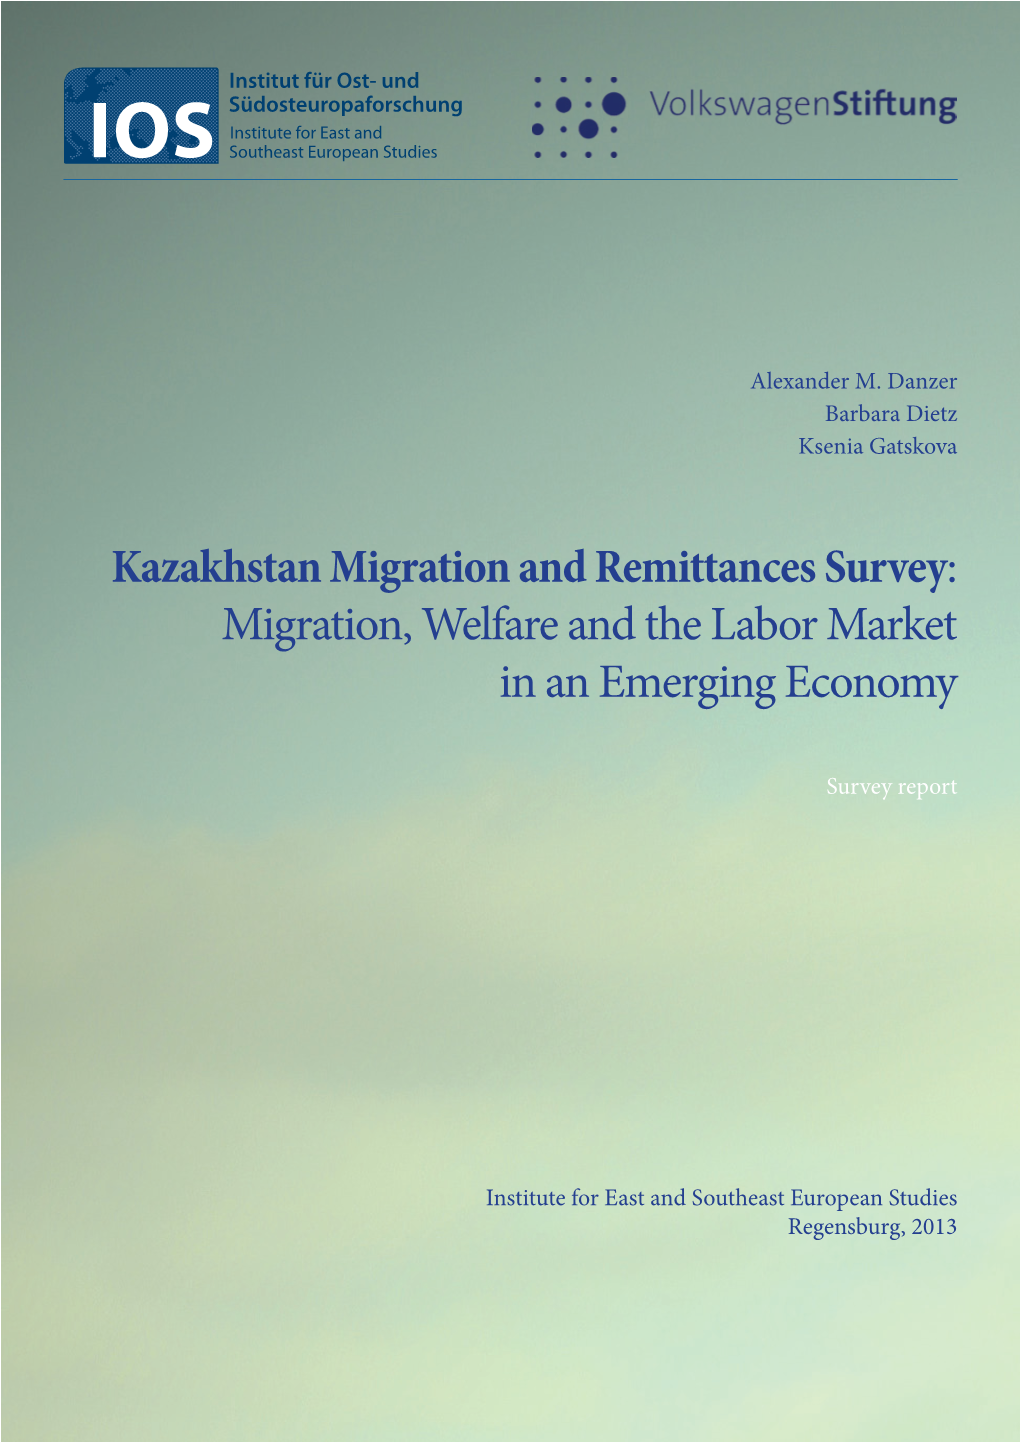 migration in kazakhstan essay